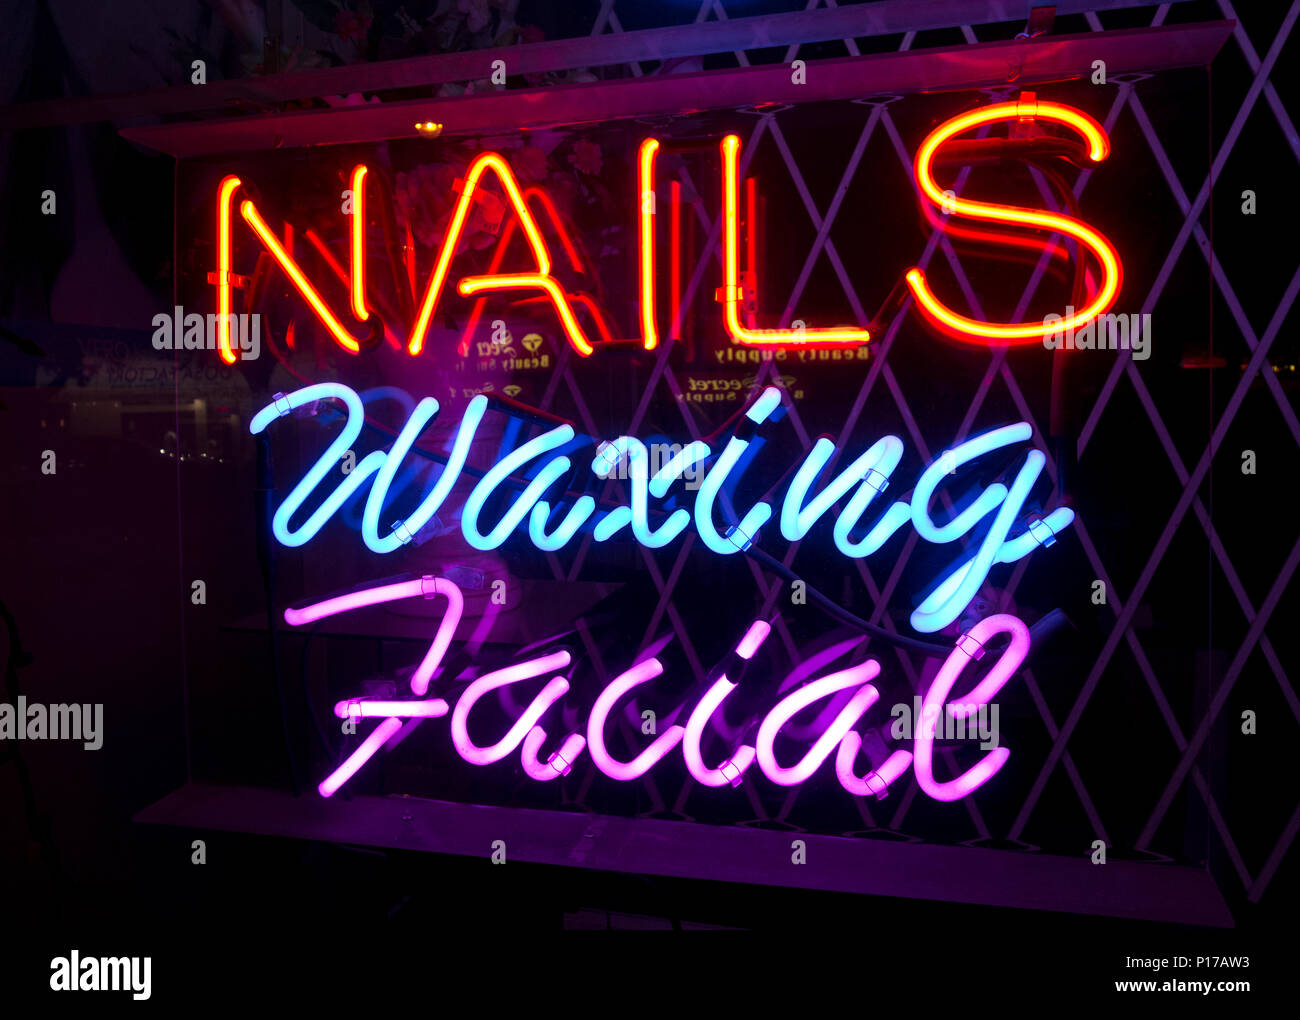 Nails Waxing Facial neon sign for beauty salon. Stock Photo